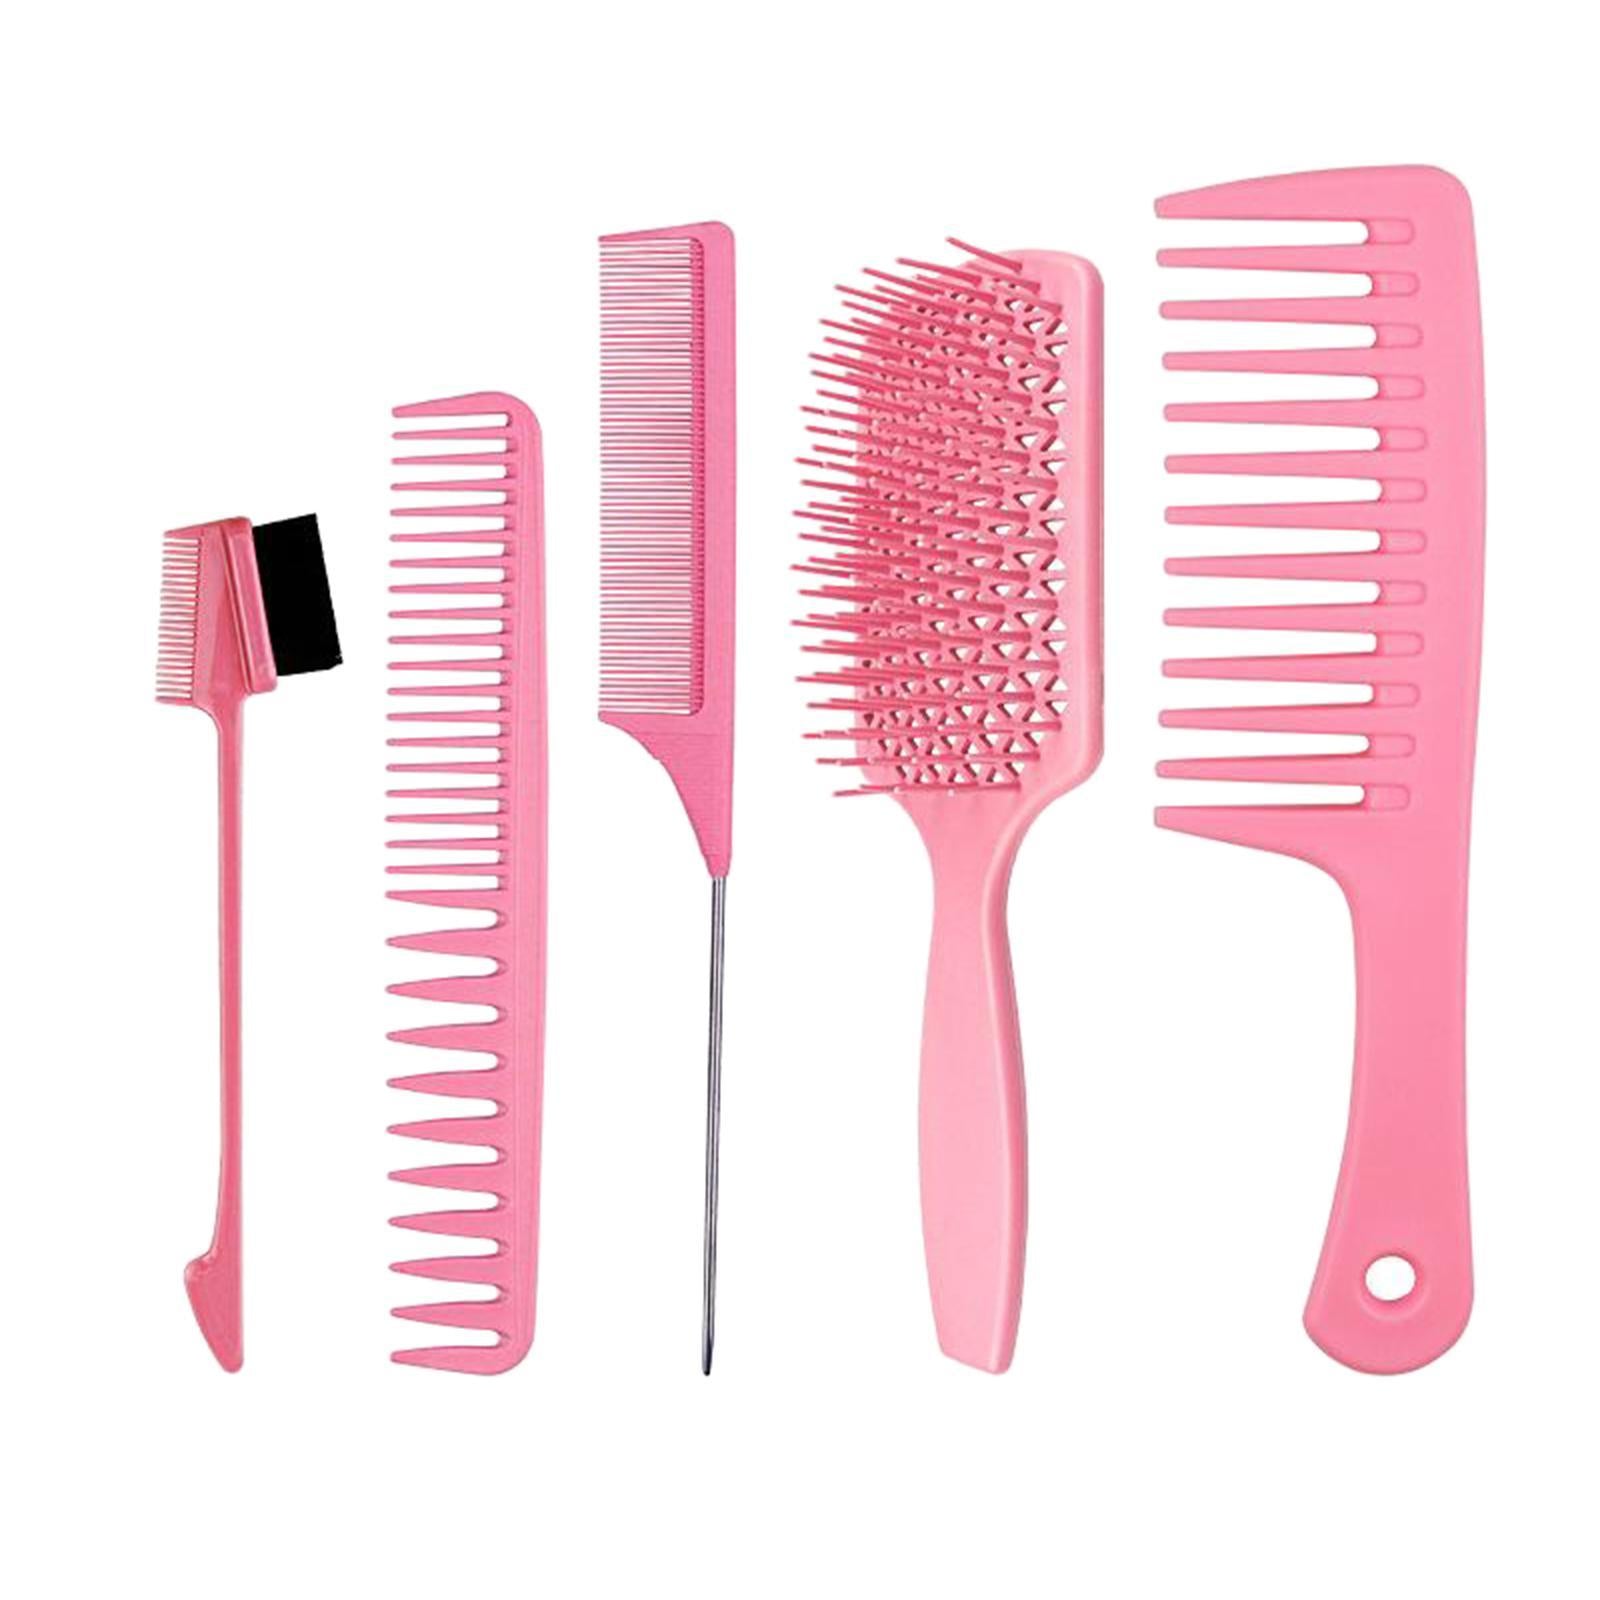 1Set Salon Hair Styling Plastic Barbers Brush Combs Set Pink